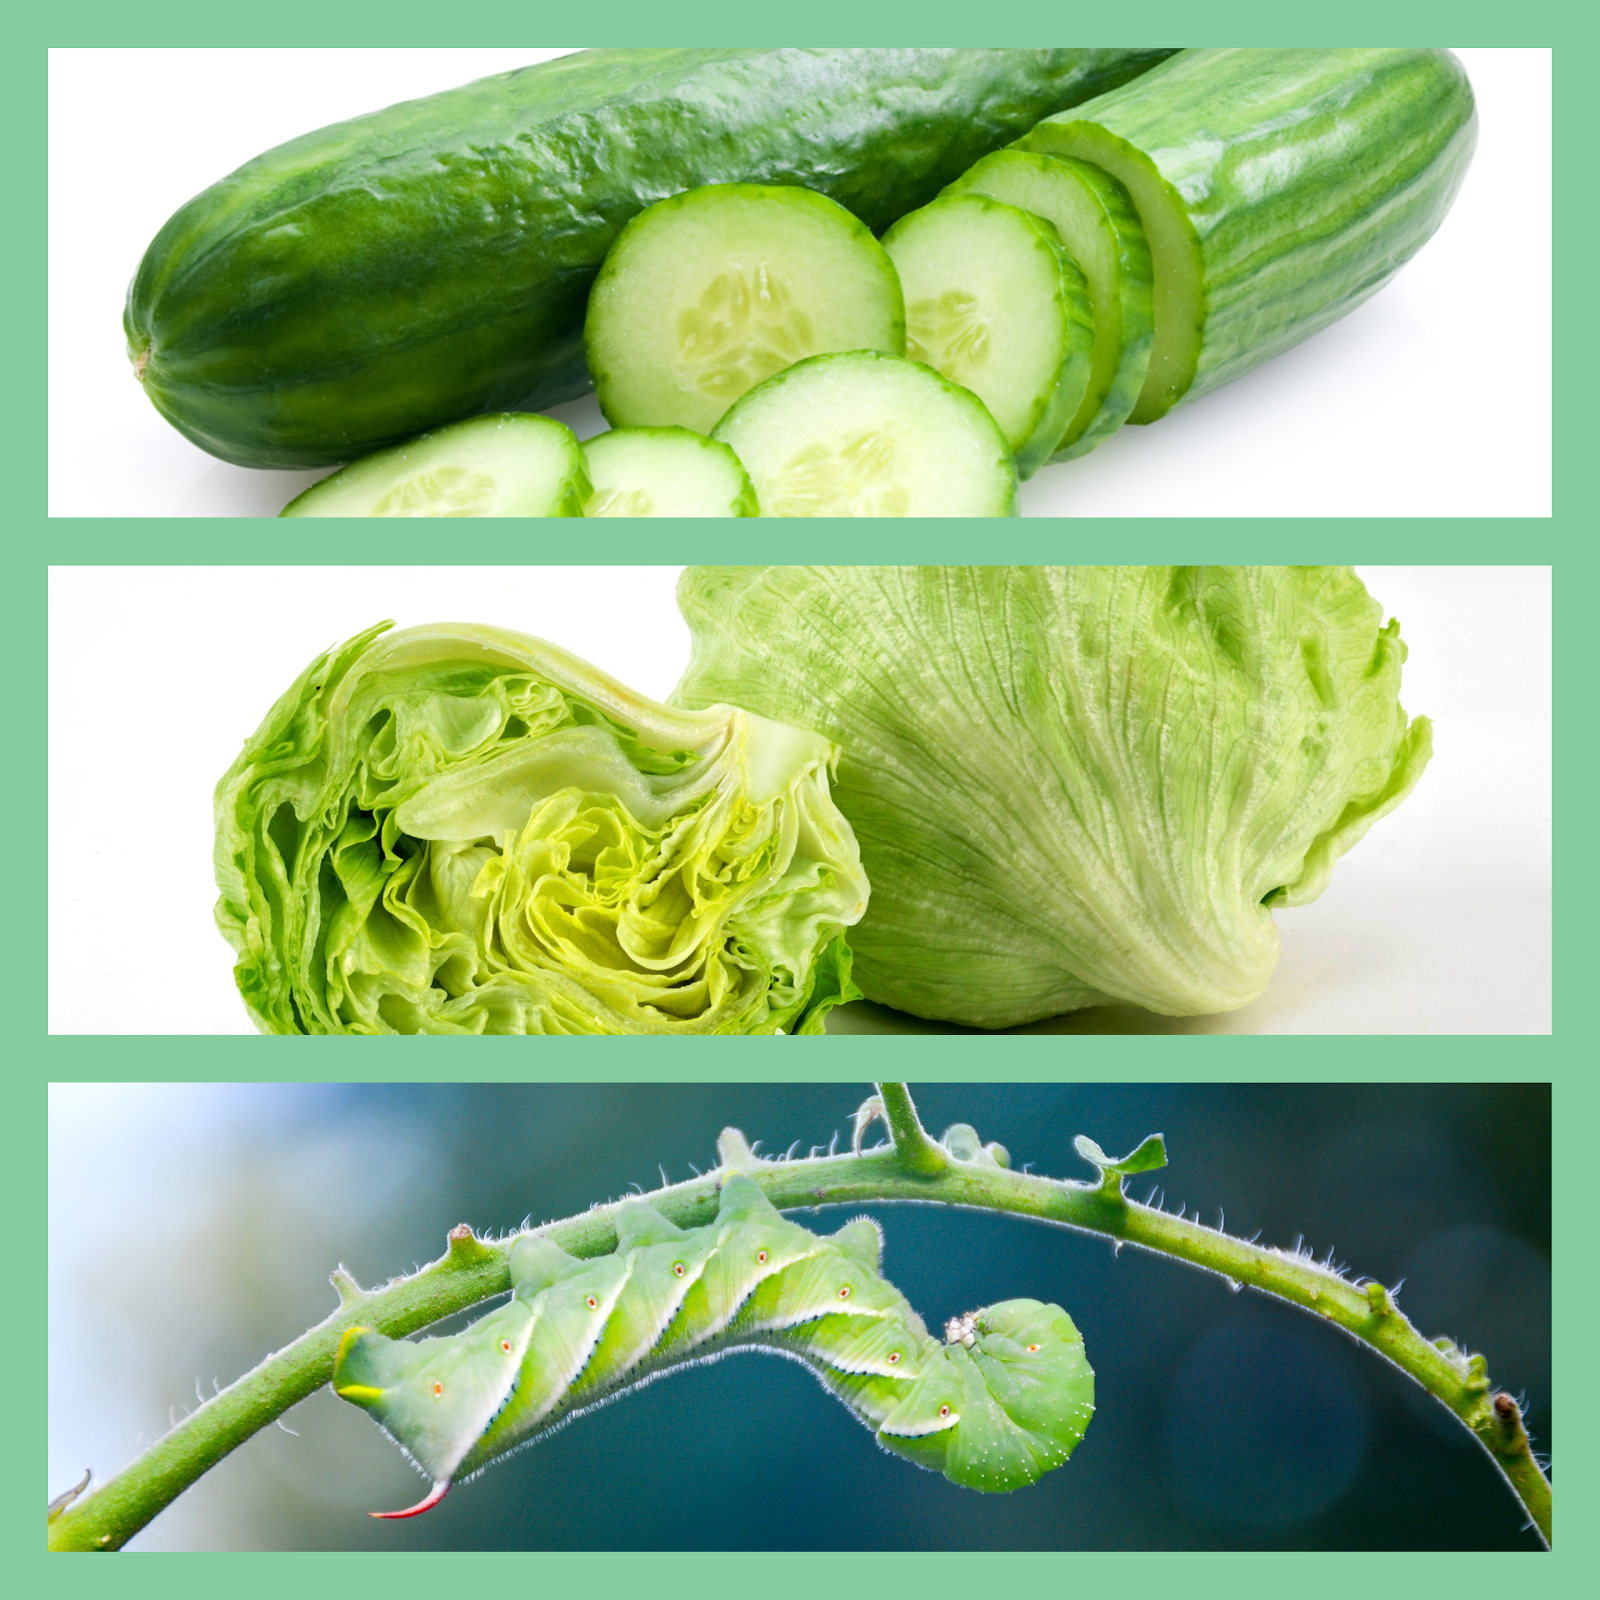 Cucumber, Lettuce and Hornworm